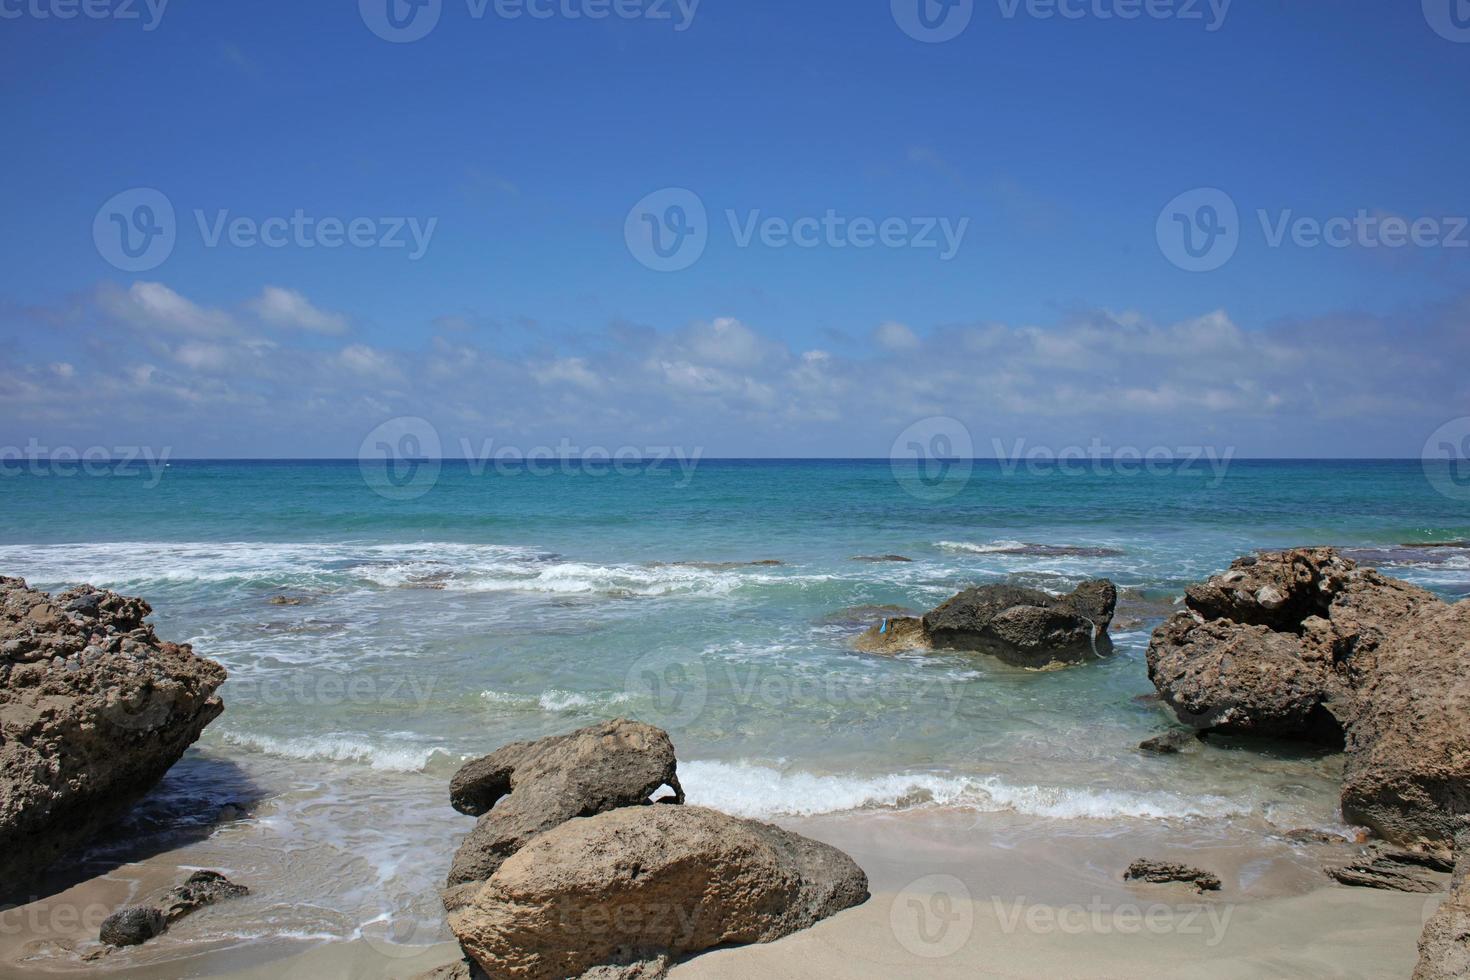 playa falassarna laguna azul isla de creta verano 2020 covid19 vacaciones foto